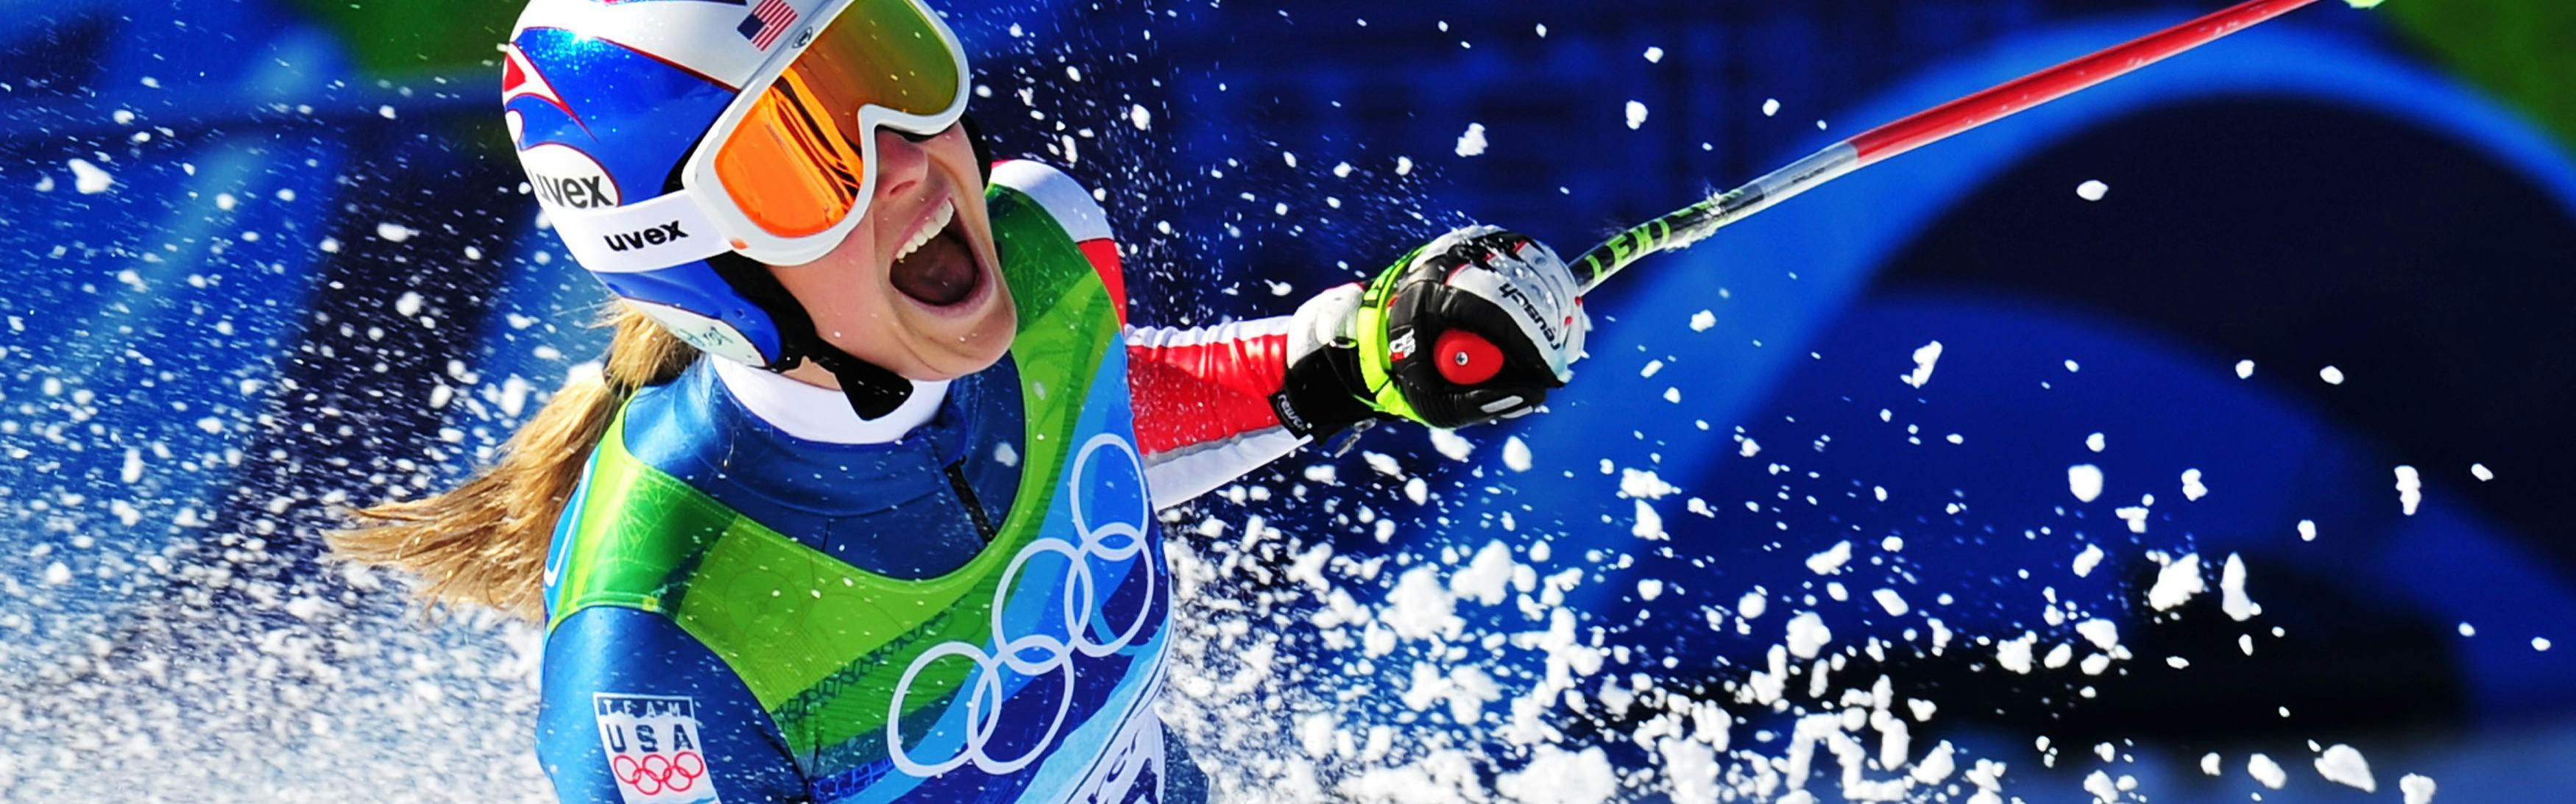 A skier celebrating after a run